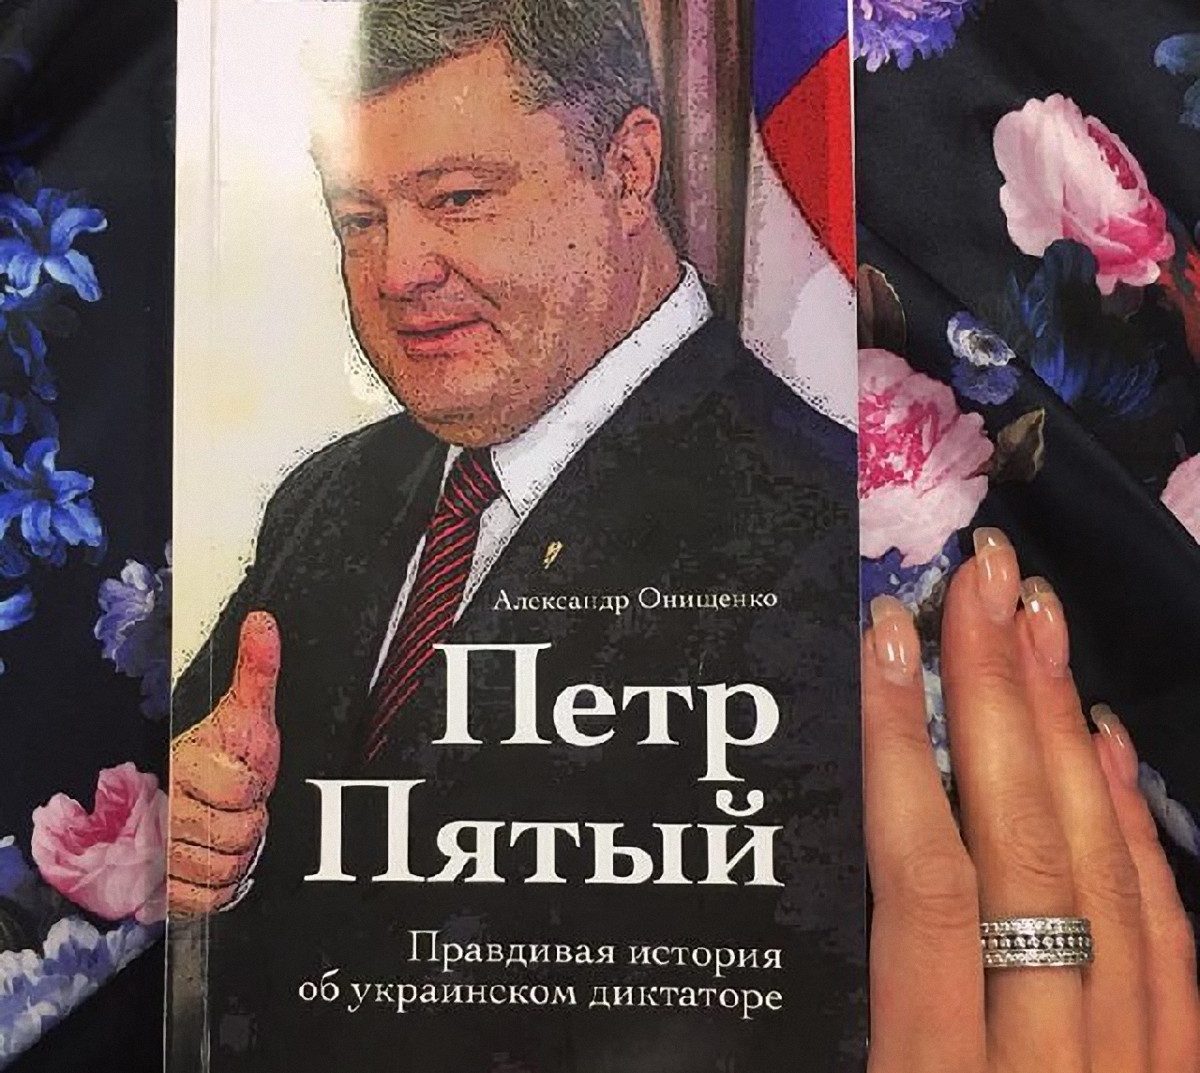 Суд назначил экспертизу книги Онищенко - фото 1